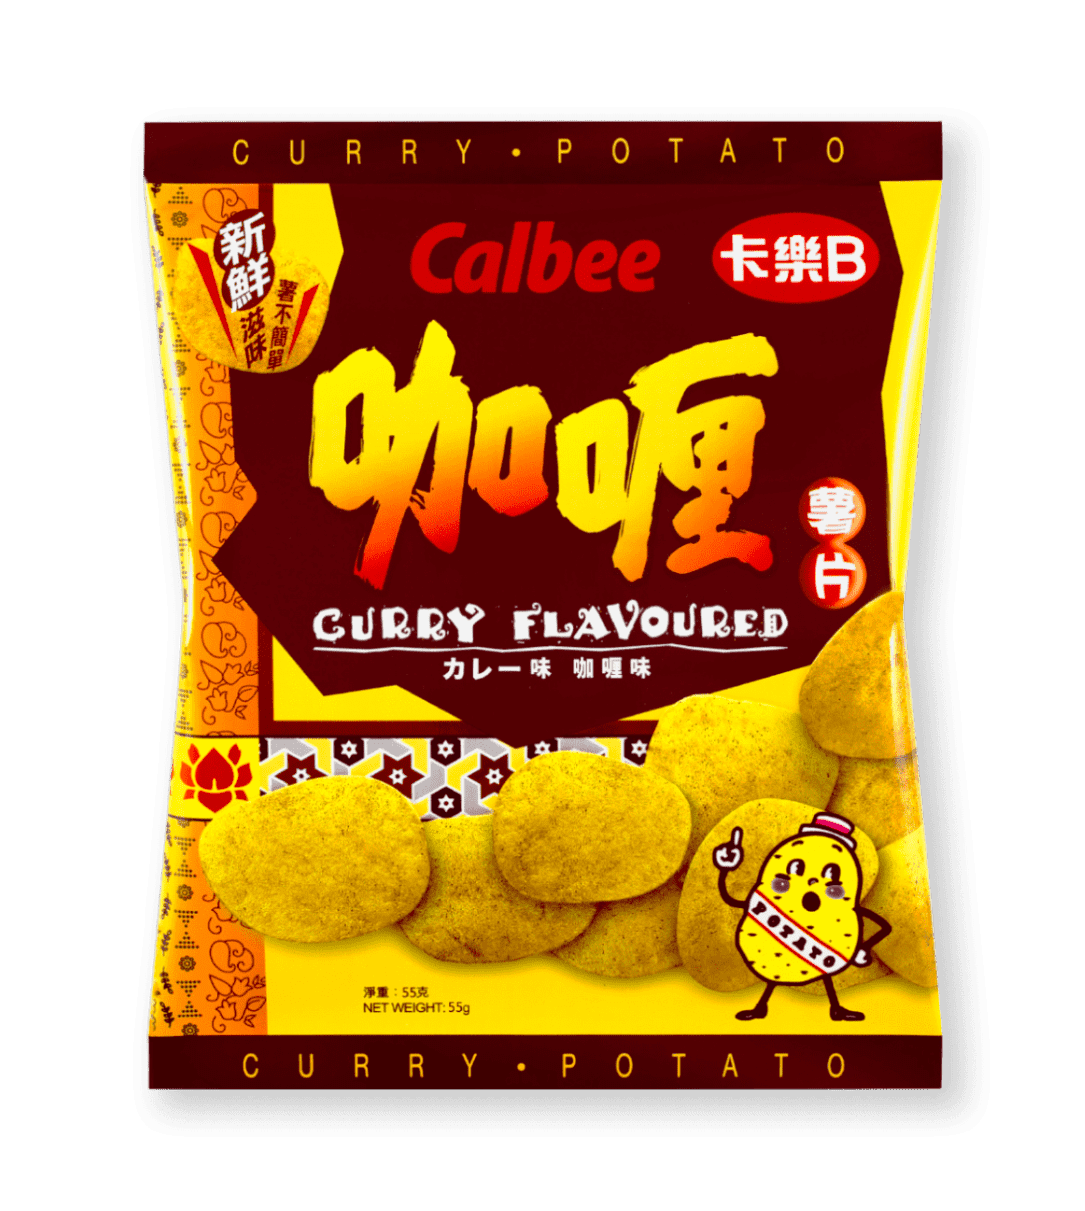 Calbee Australia - World Foods - Potato Chips - Curry Flavoured